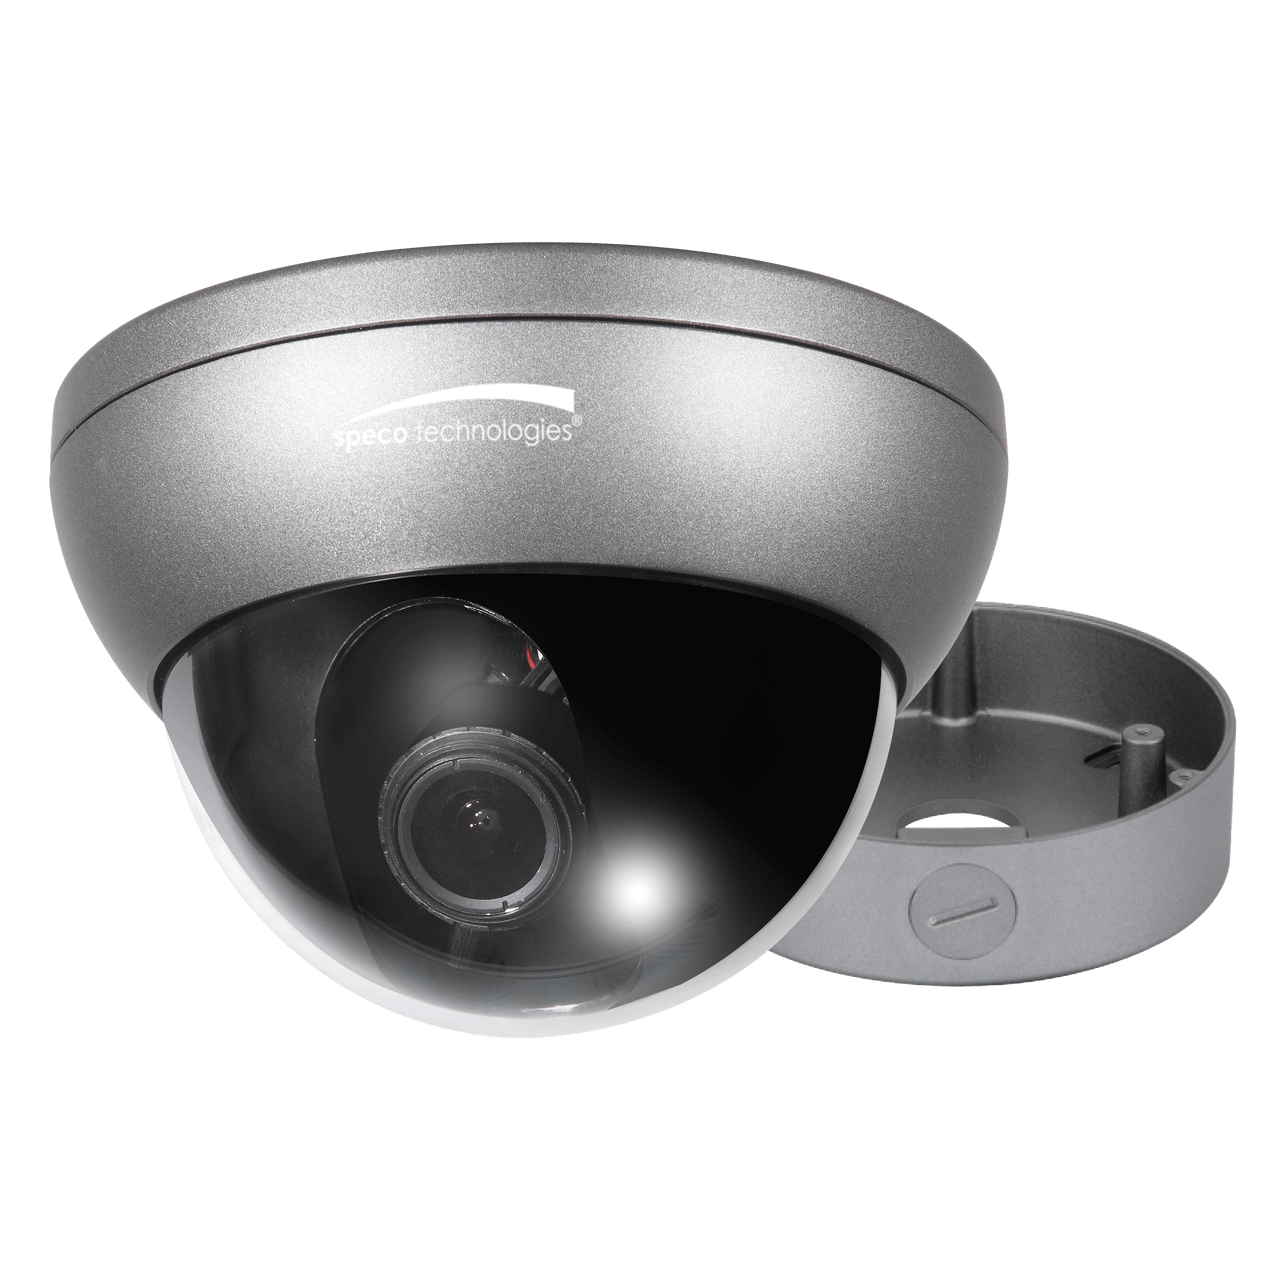 Speco Technologies SPE-HT7246T 2MP HD-TVI IntensifierT Vandal Dome Camera, 2.8-12m lens, Grey Housing, Included (SPE-HT7246T)